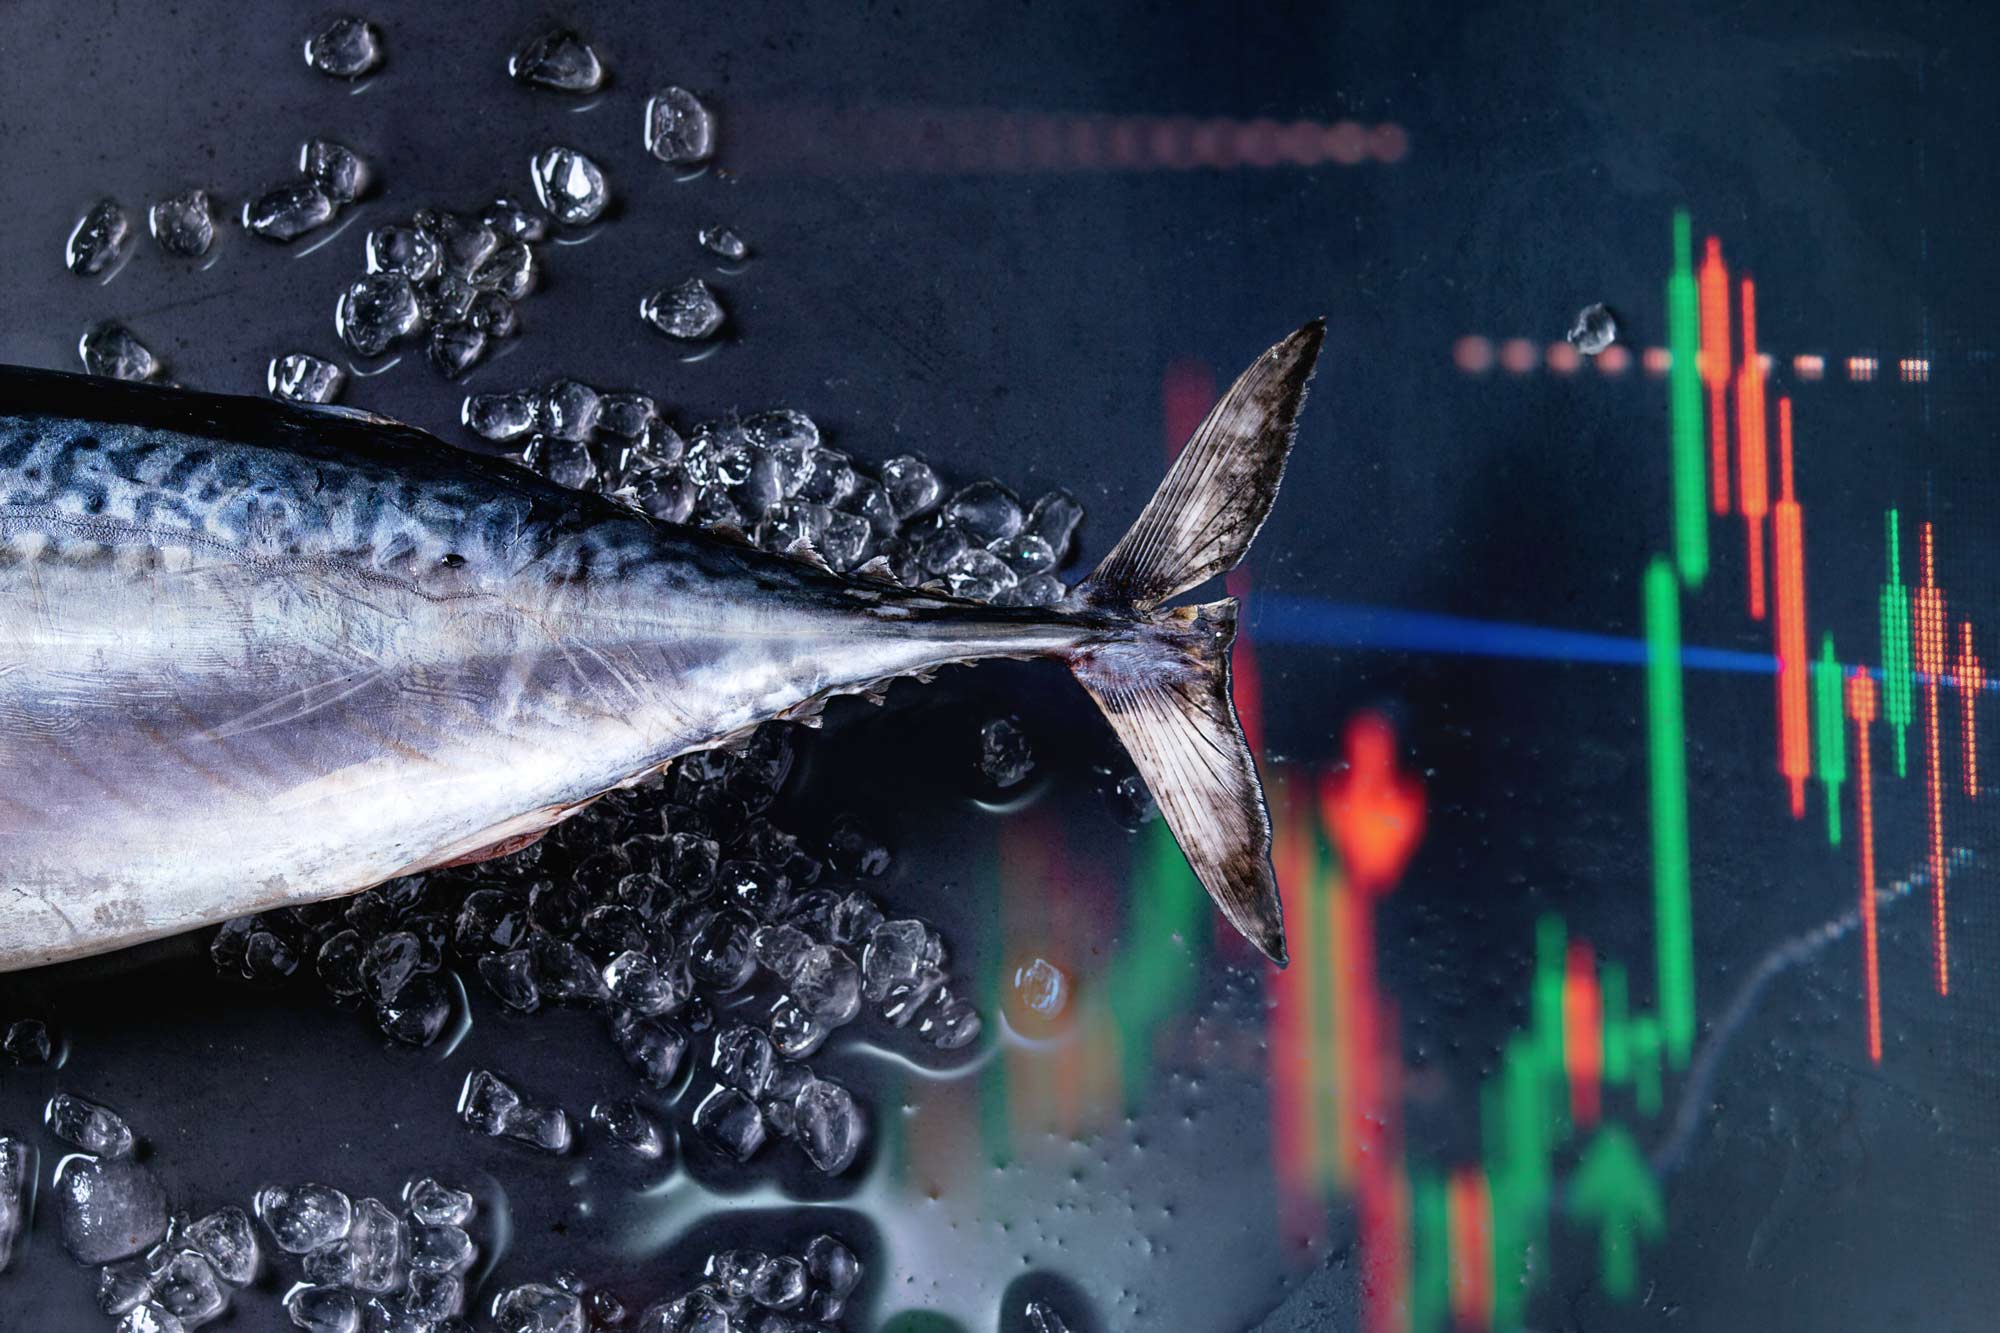 Clipper Oil: Global Tuna Alliance (GTA) Calls on WCPFC To Keep Tuna Stocks in the Green